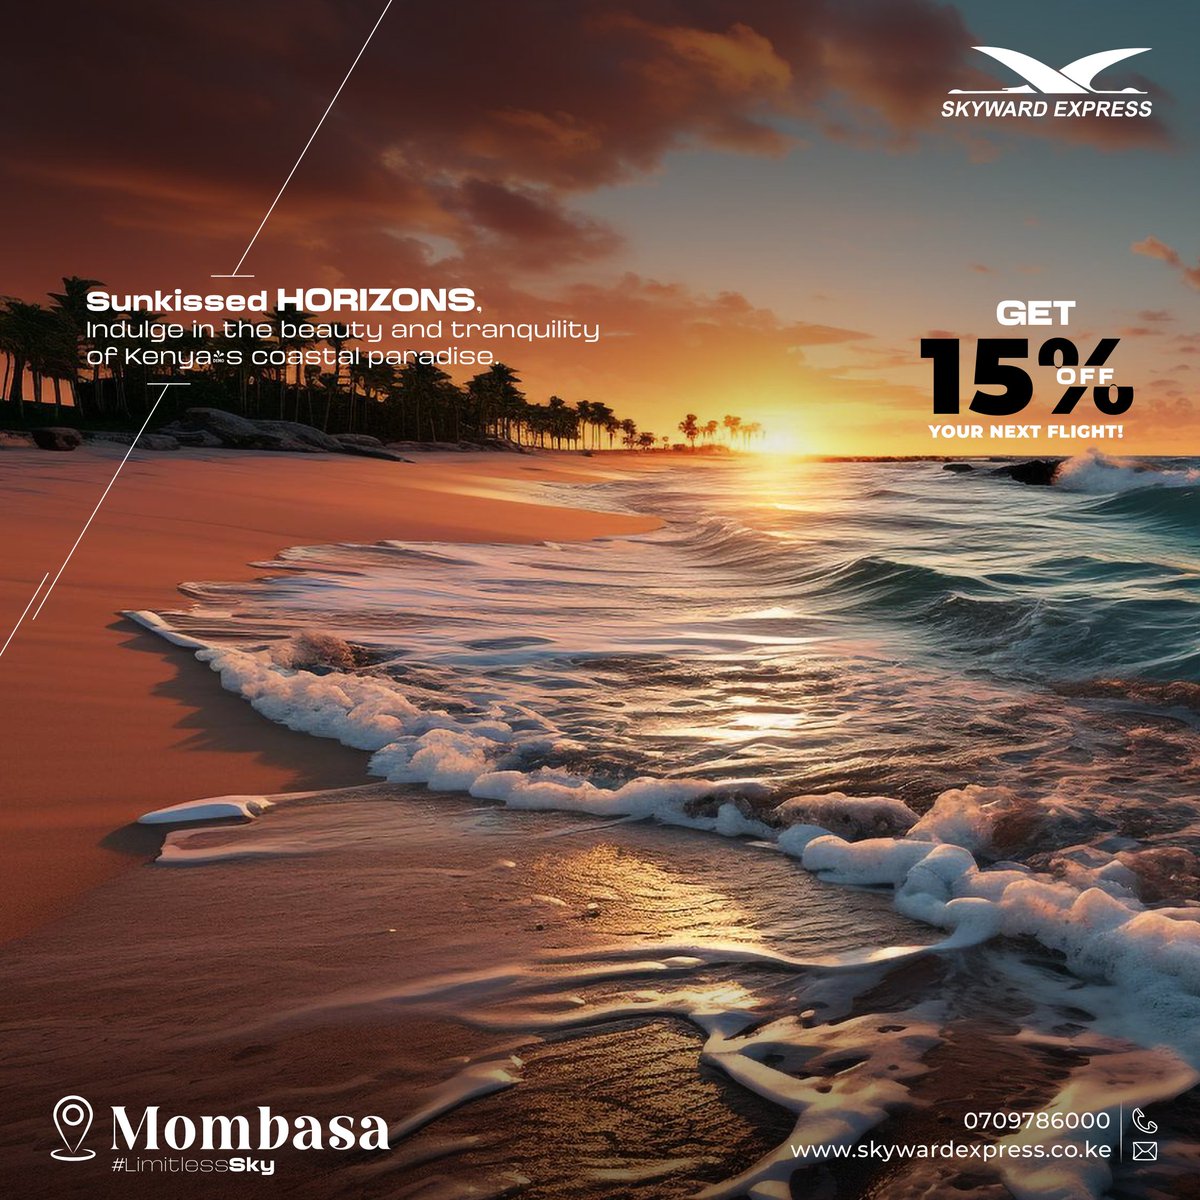 Embrace the rhythm of the waves and the enchantment of Mombasa's coastal charm. Book your flight now at skywardexpress.co.ke and enjoy 15% off your next flight.
#mombasaraha #travel  #coastalescape #flyskywardexpress #limitlesssky